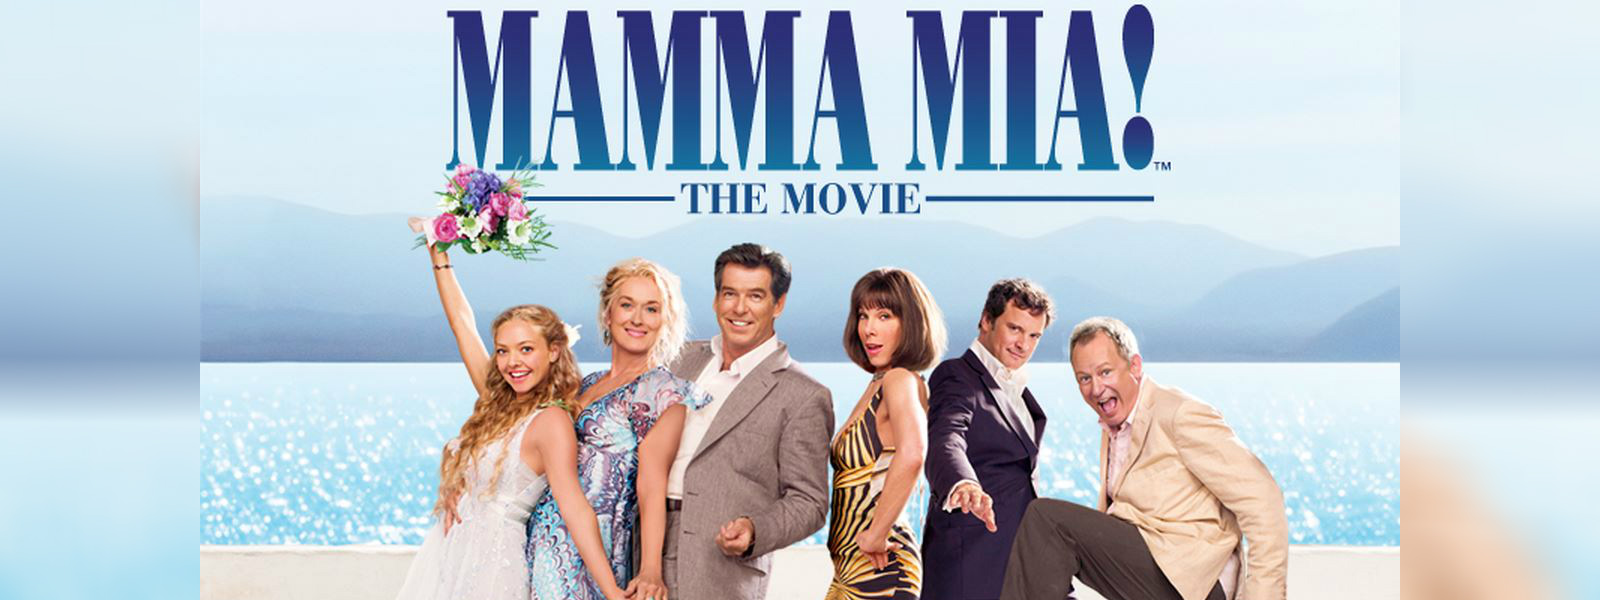 "Mamma Mia!" sequel expected to top North America